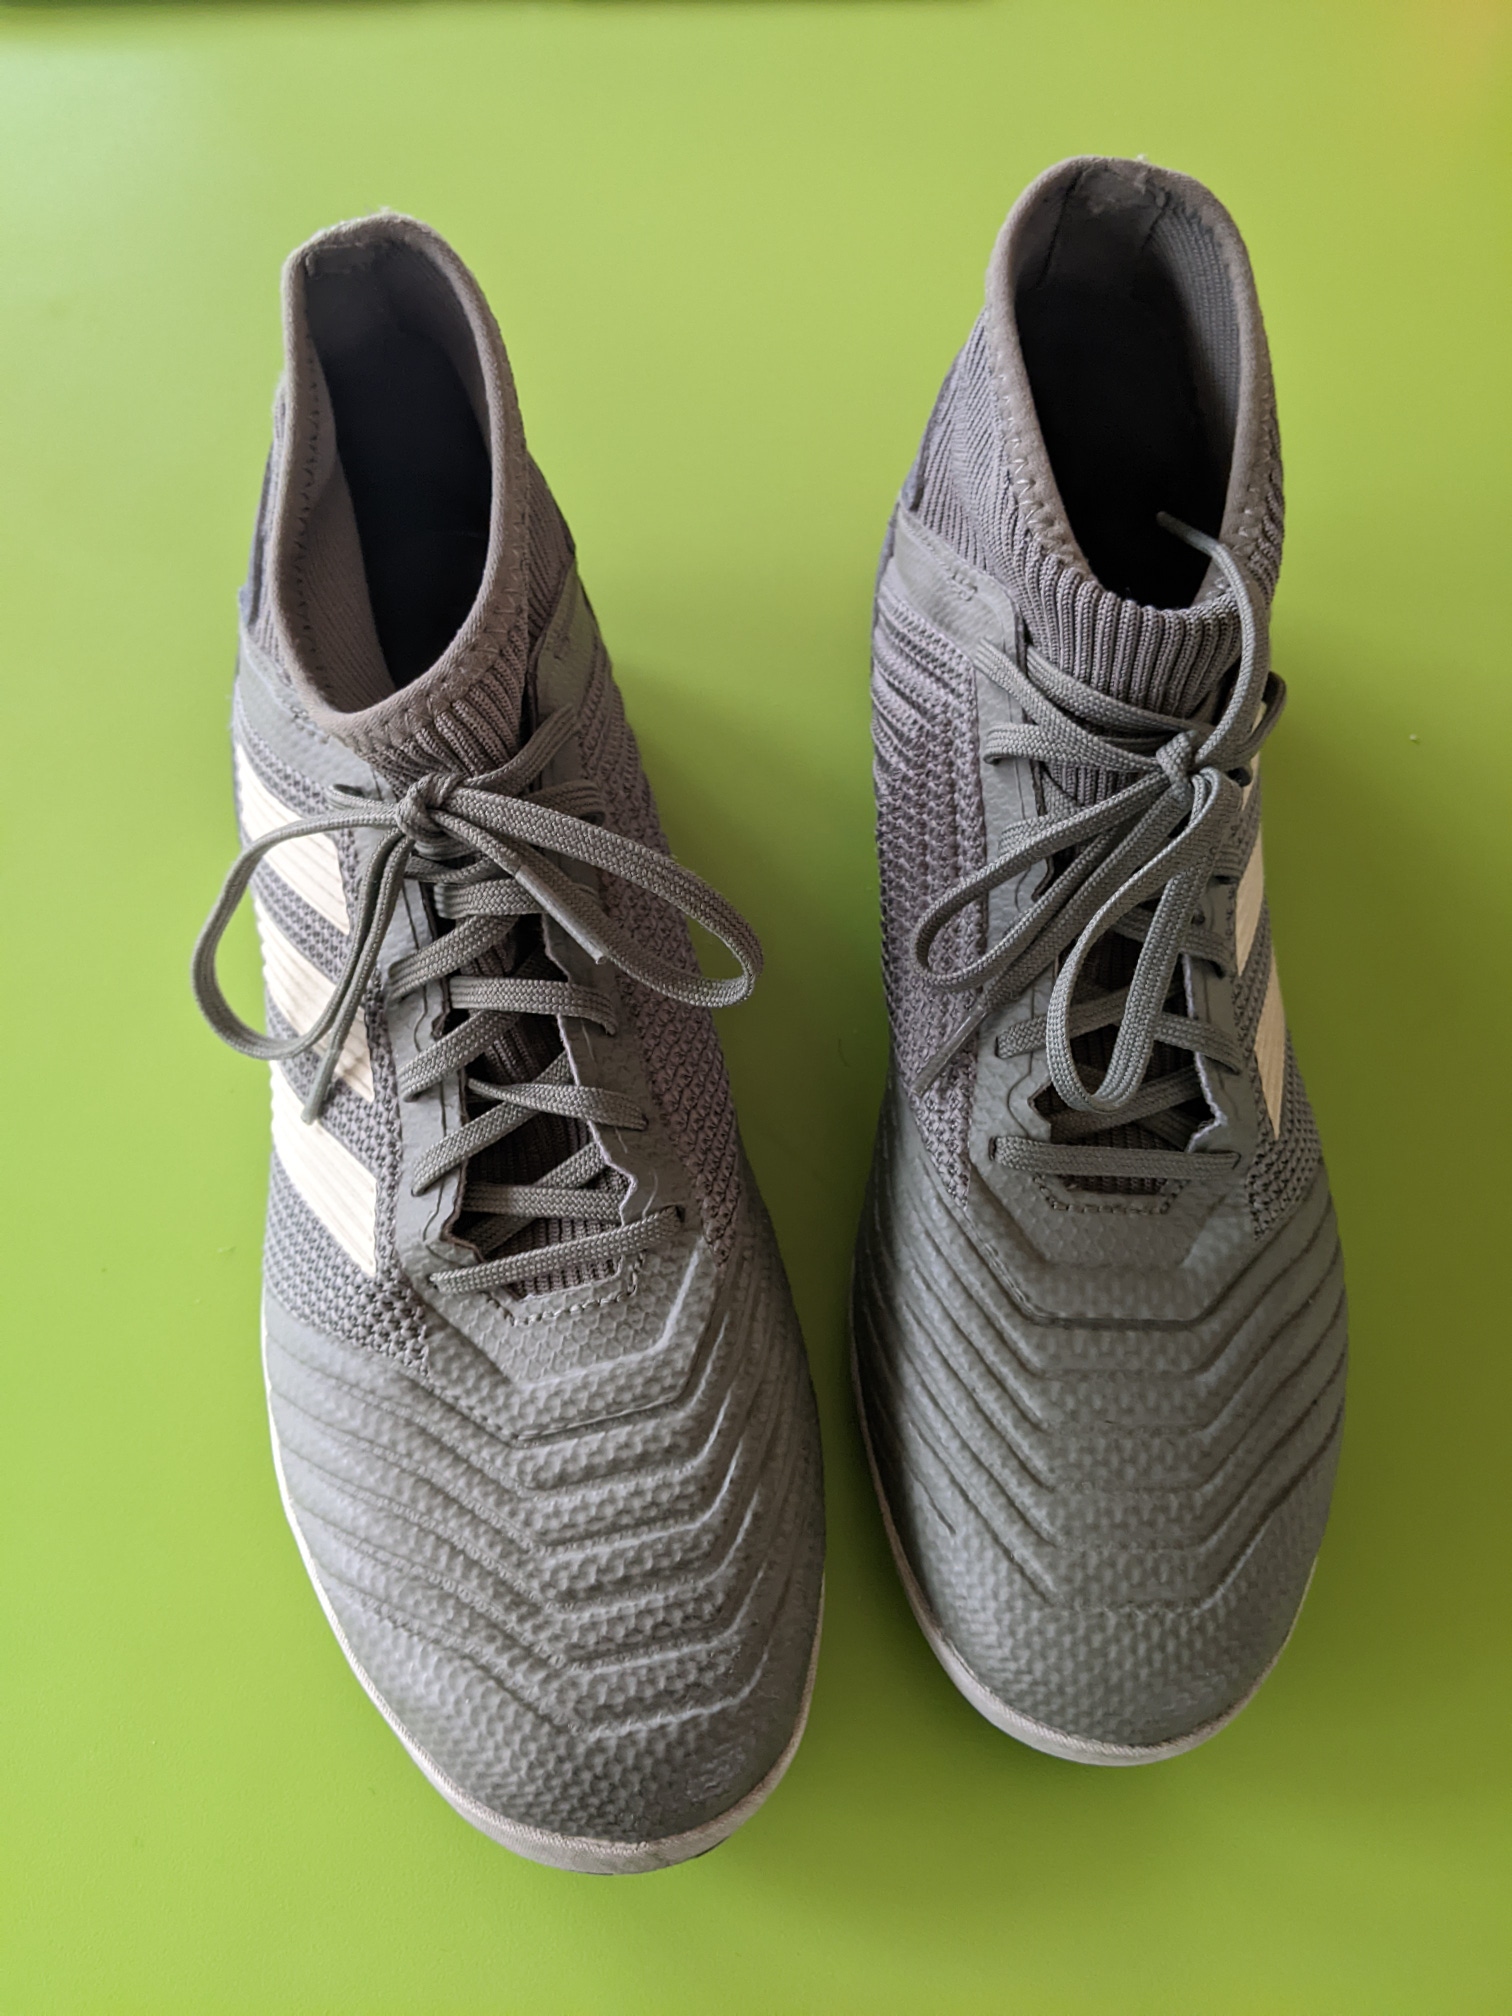 Adidas Men's Predator 19.3 TF Soccer Shoes 9.5